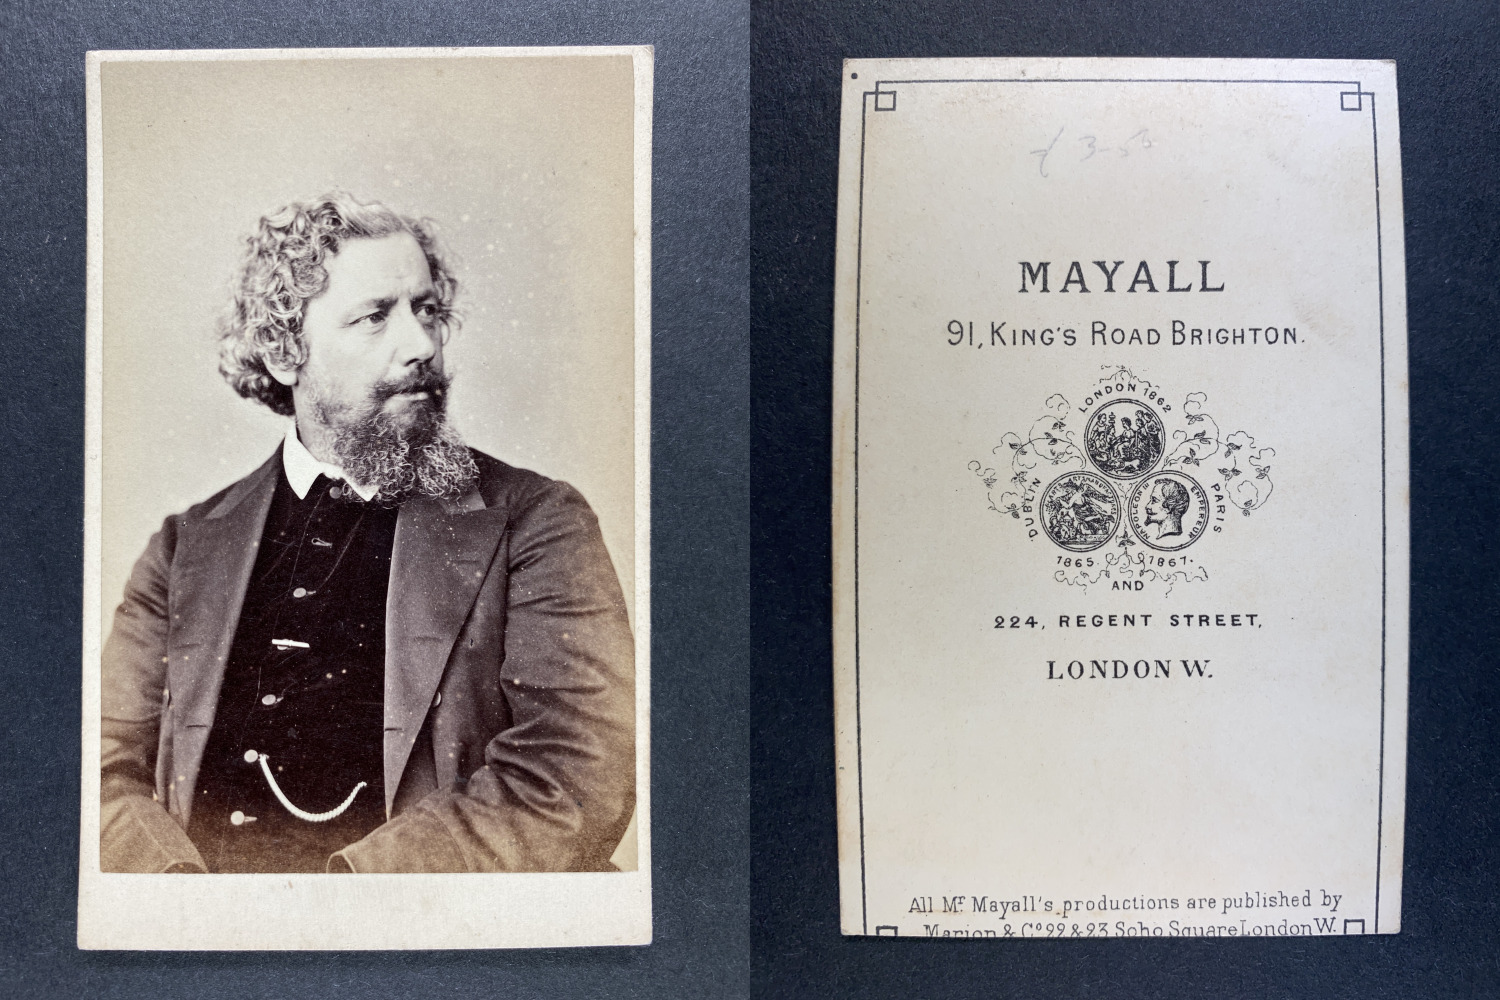 Mayall, London, William Morris CDV Vintage Albumen Print.William Morris, Born the